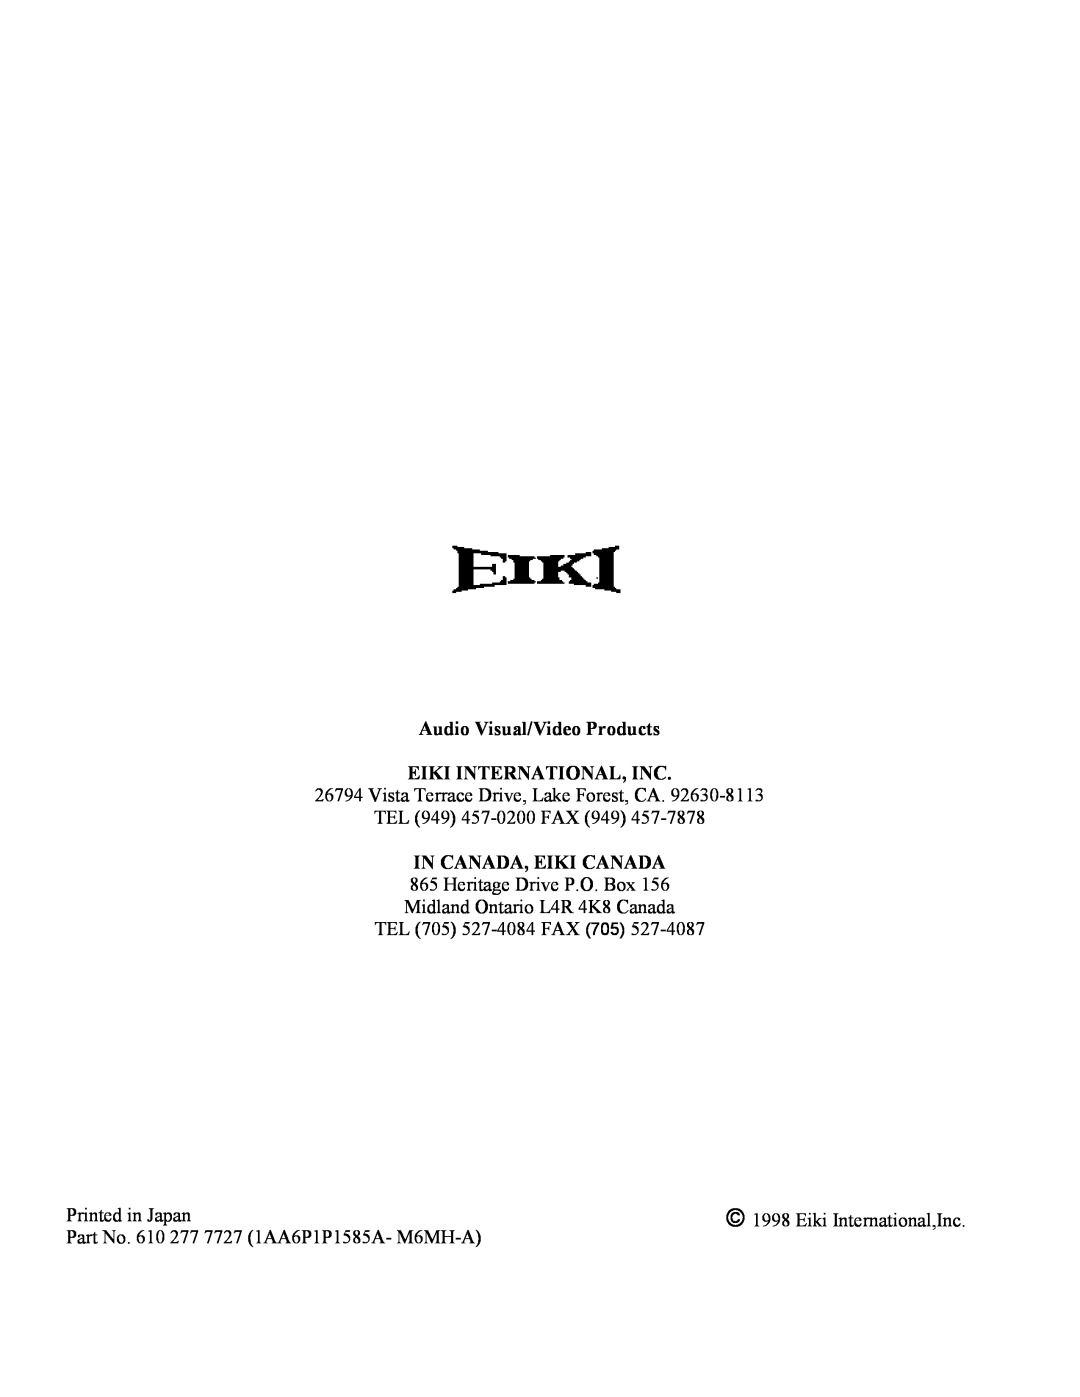 Eiki LC-X1UA Audio Visual/Video Products, Eiki International, Inc, Vista Terrace Drive, Lake Forest, CA, Printed in Japan 